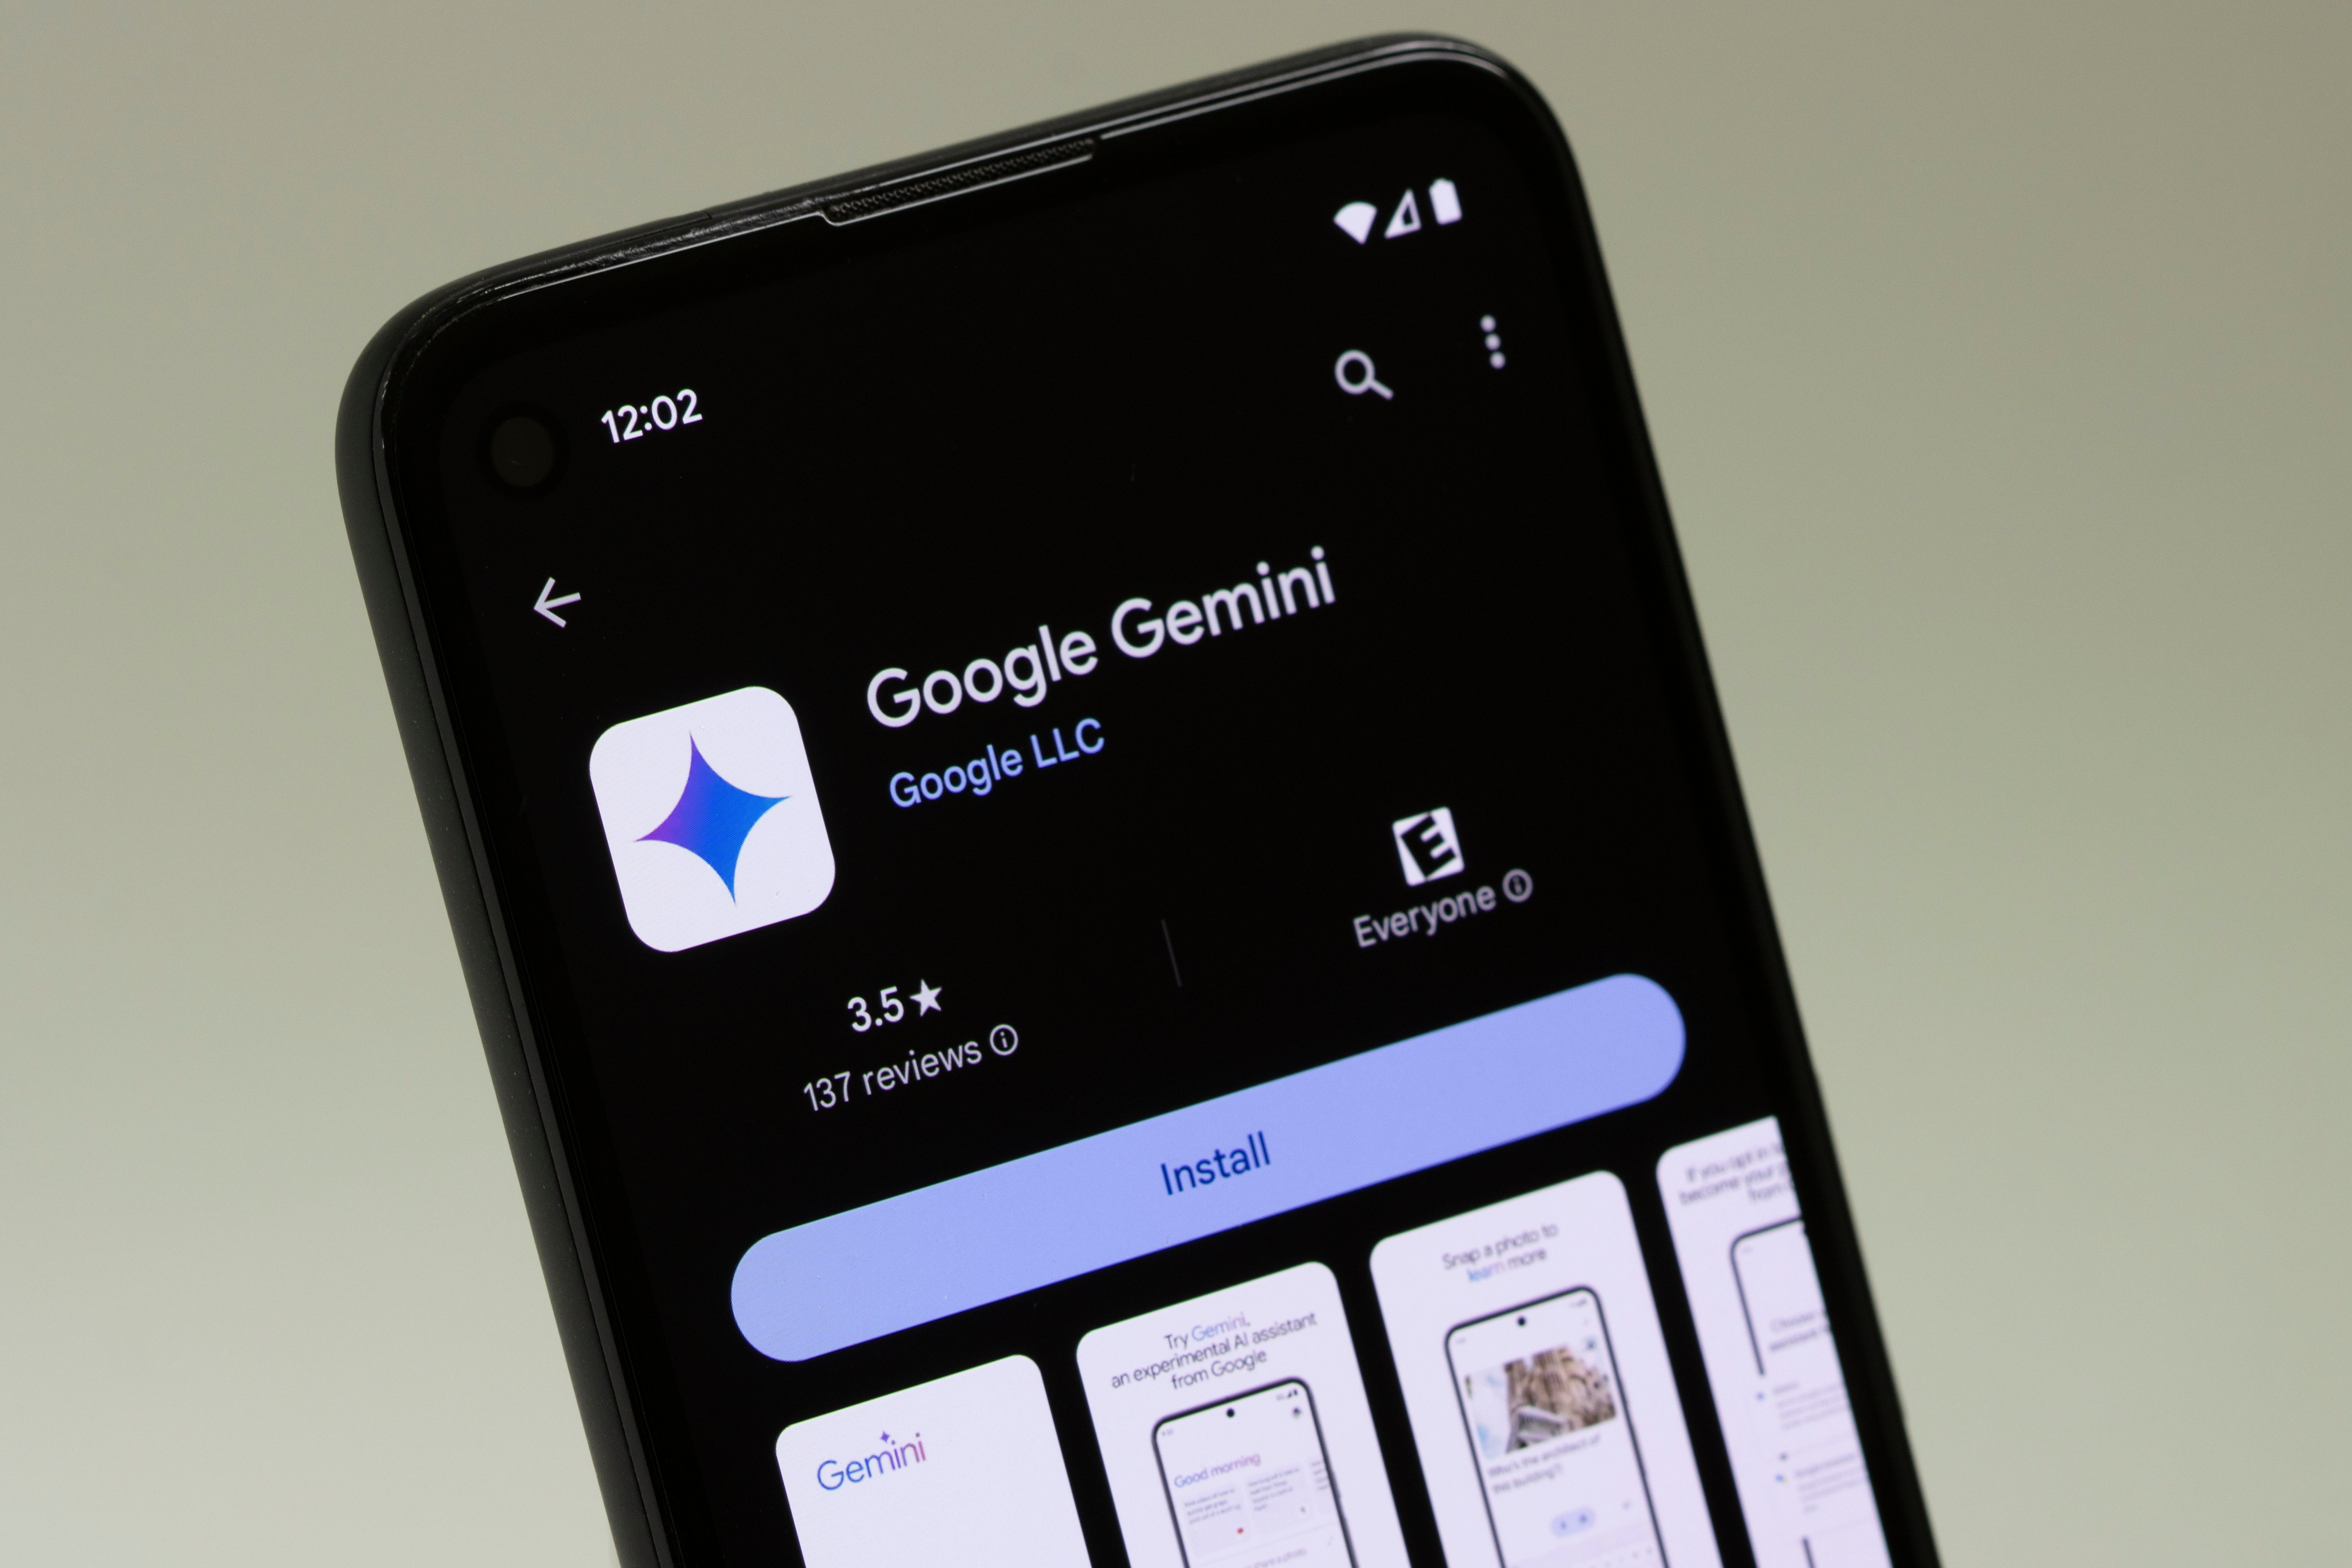 Google Gemini app on the Google Play app store